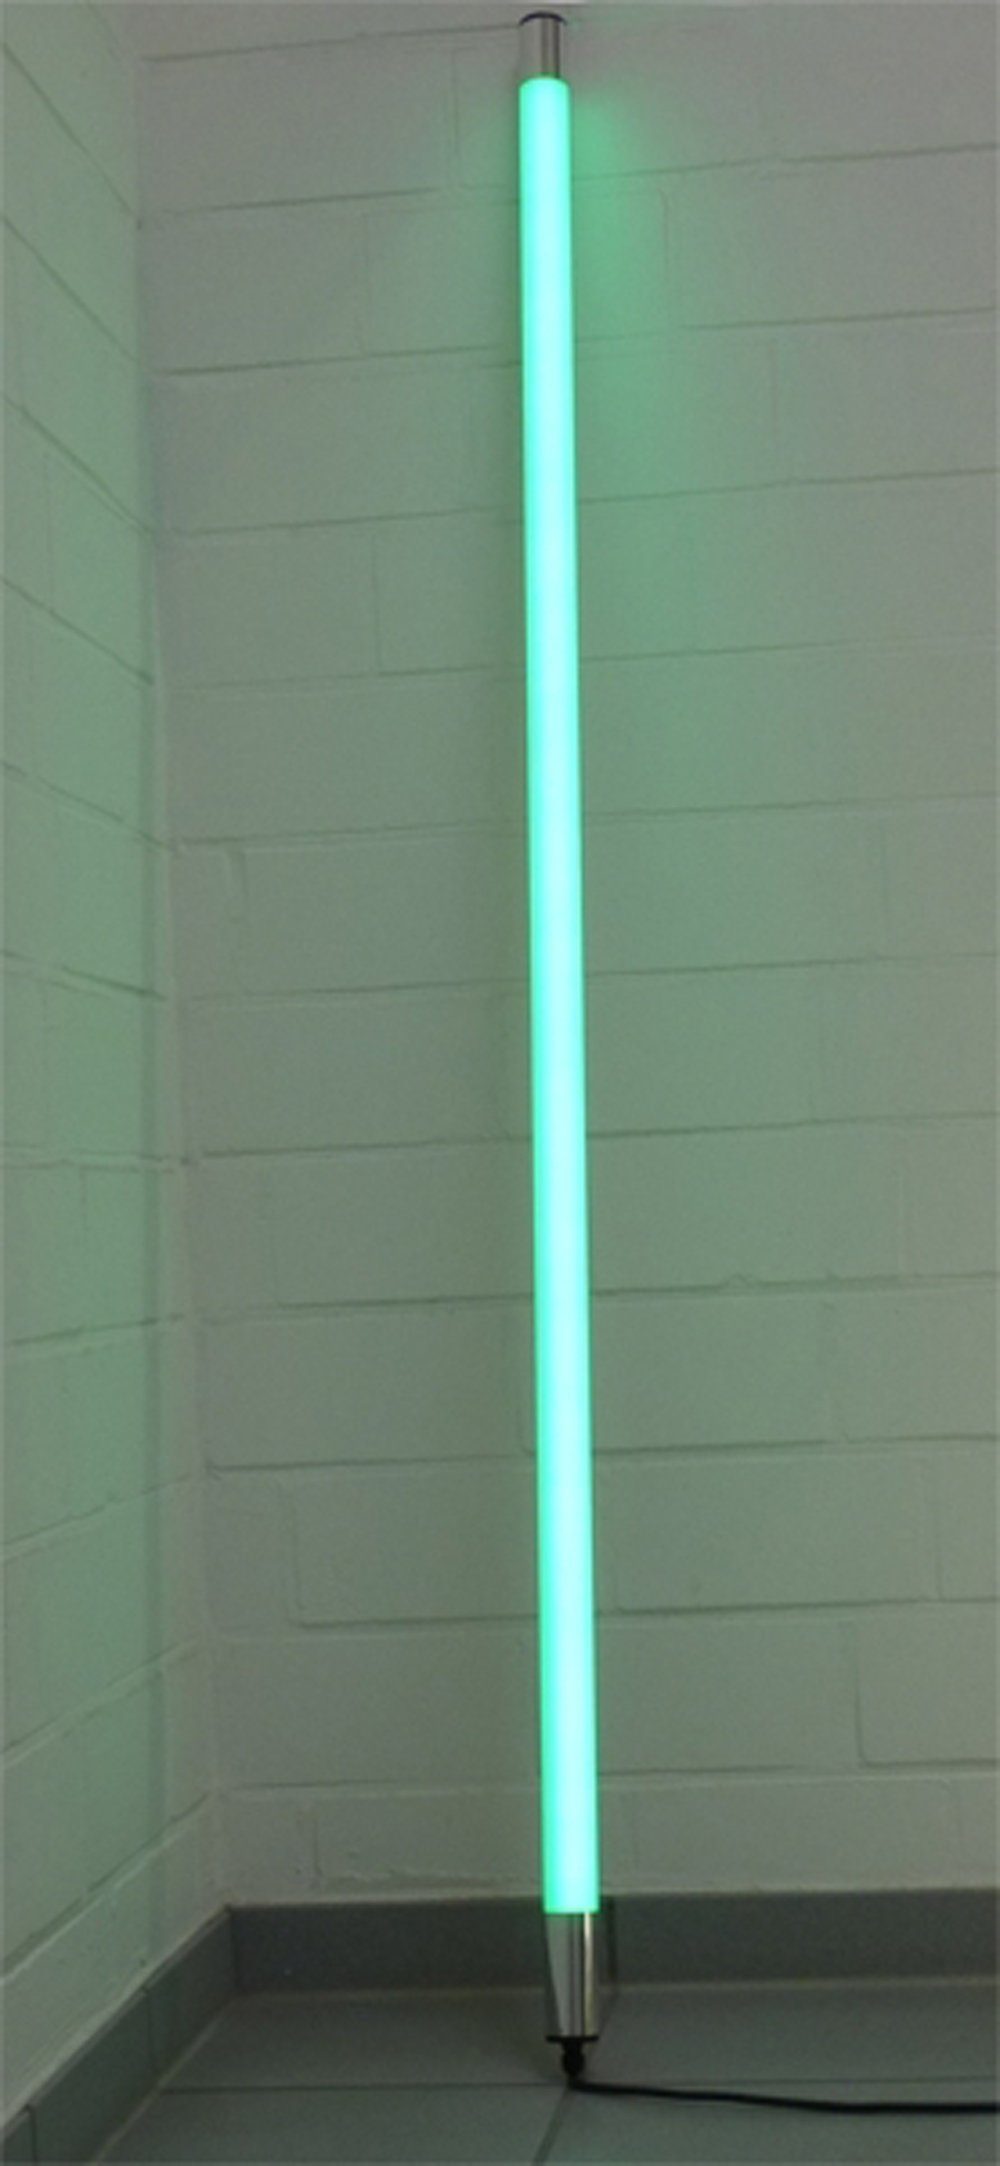 XENON LED Wandleuchte 6728 LED Leuchtstab Satiniert 0,63m Lang 1000Lumen IP20 Innen Grün, LED Röhre T8, Xenon